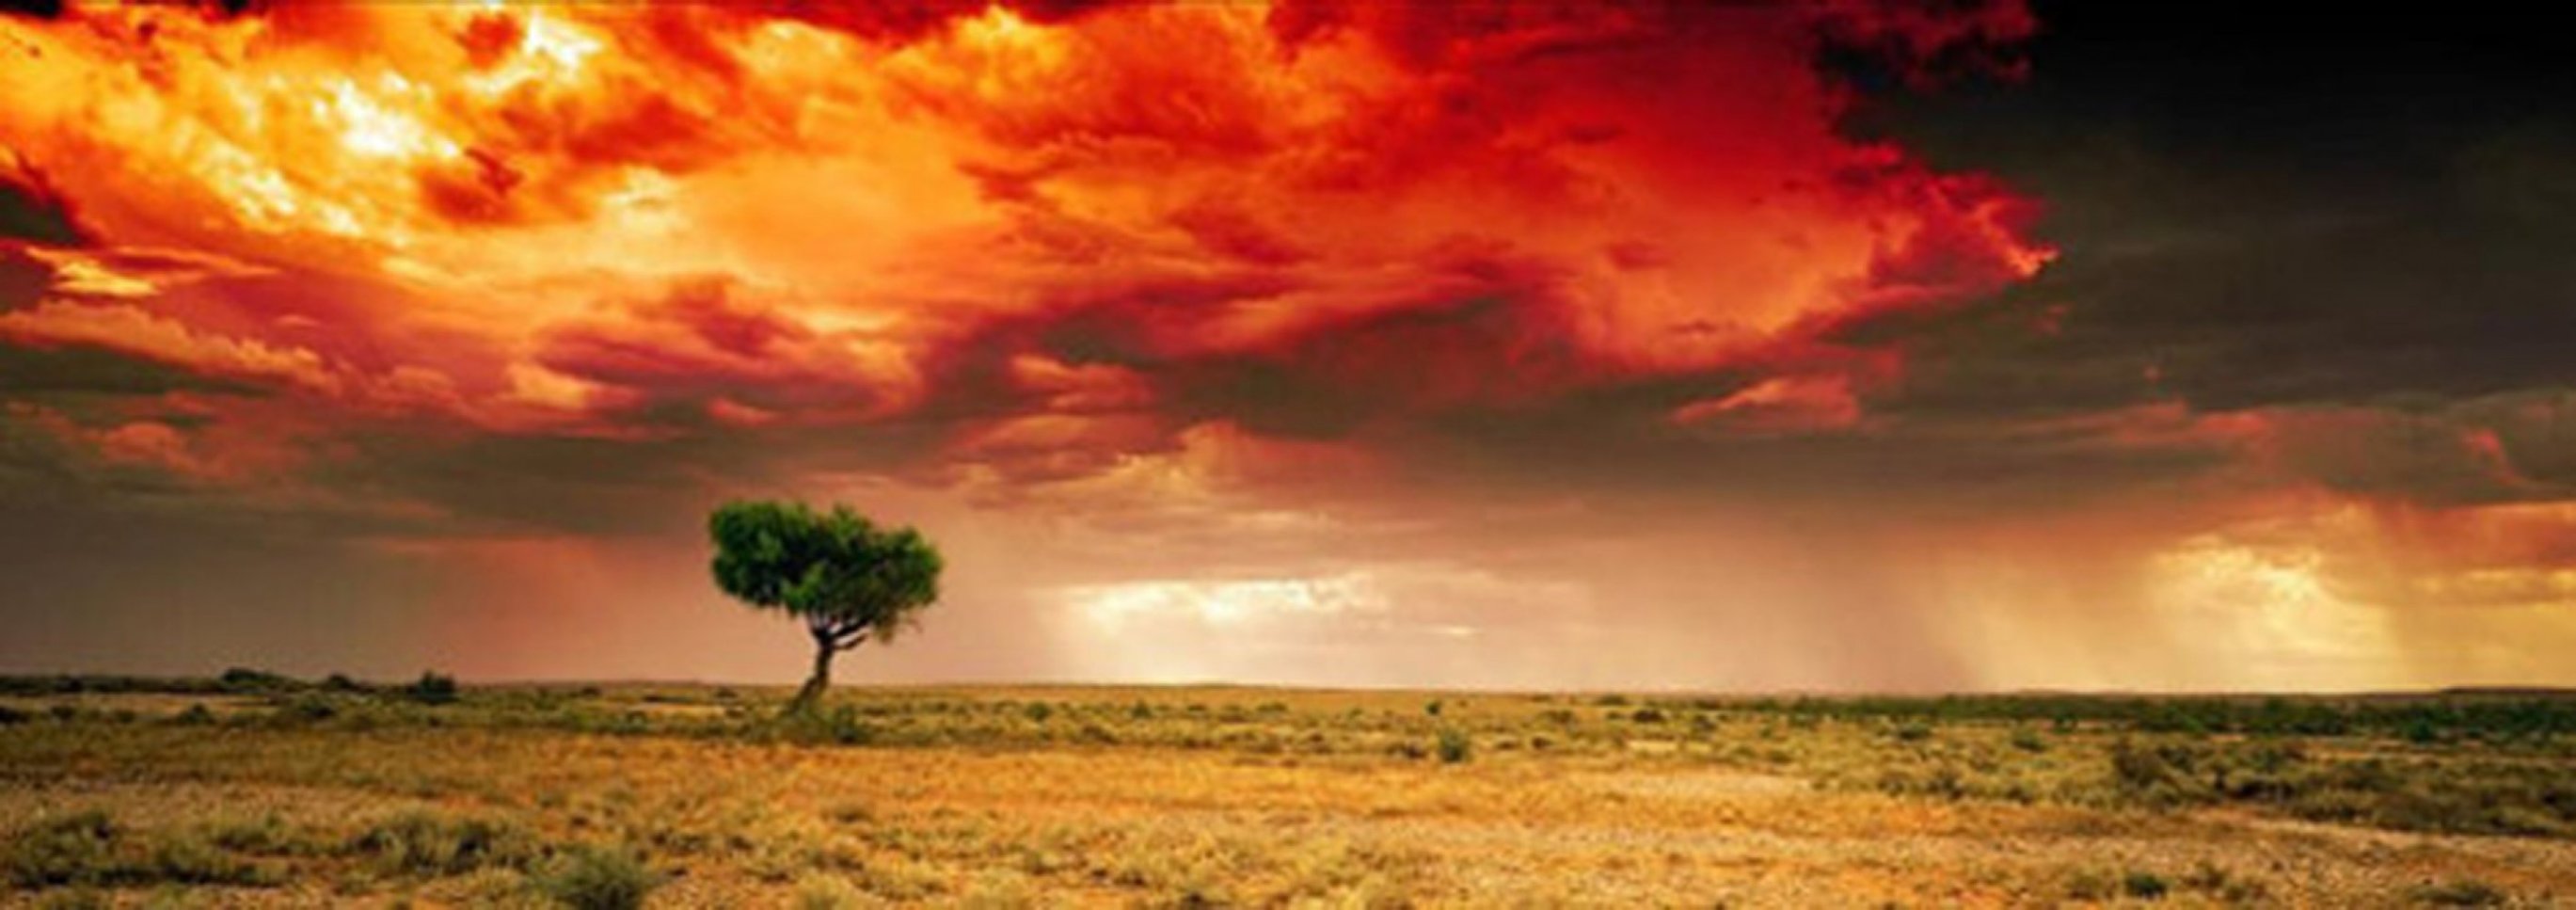 Dreamland (InnamIncka, South Australia)  Panorama by Peter Lik